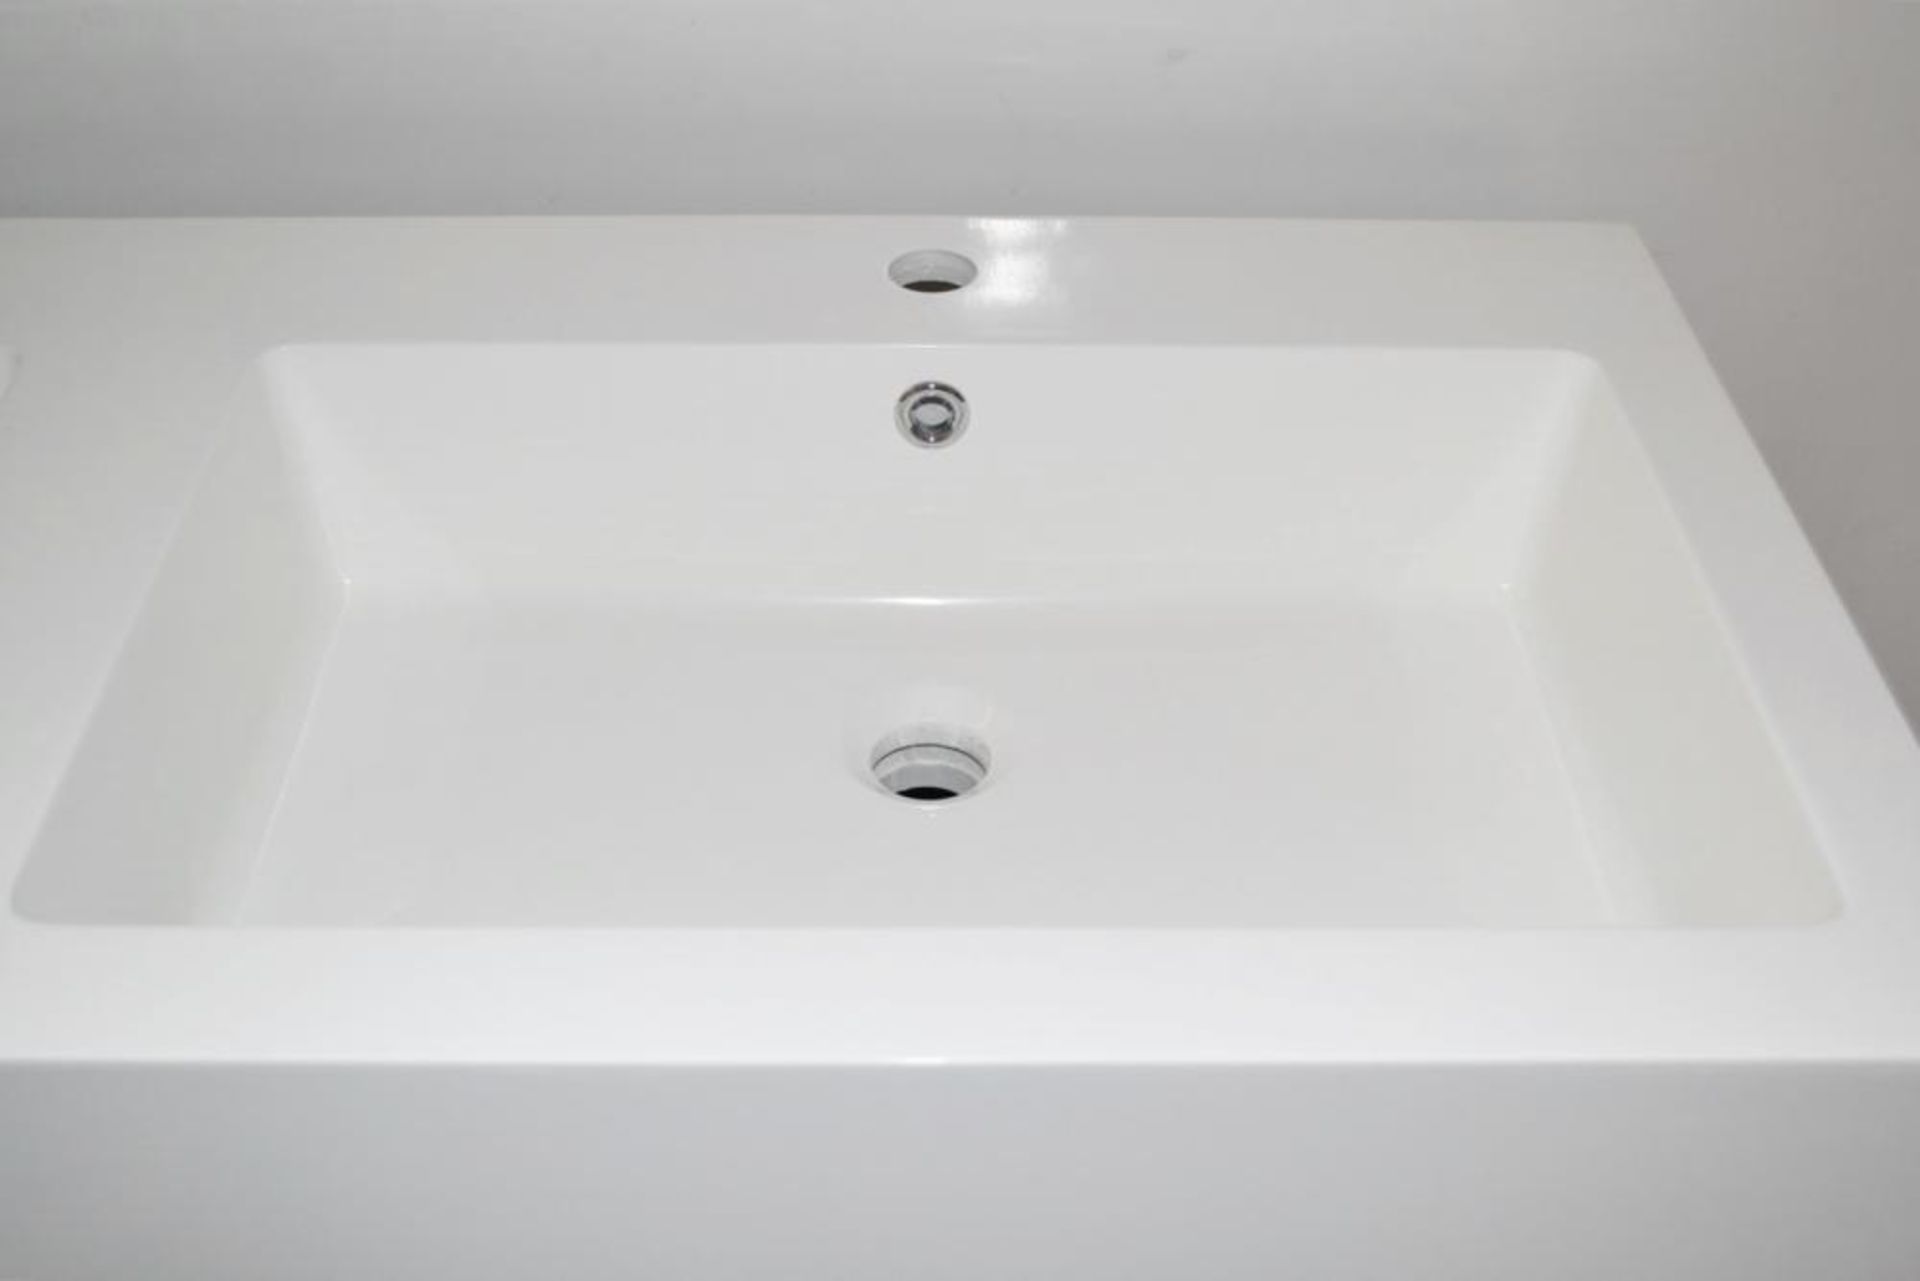 JOB LOT of 10 x Gloss White 1200mm 4-Door Double Basin Freestanding Bathroom Cabinets - New & - Image 5 of 7